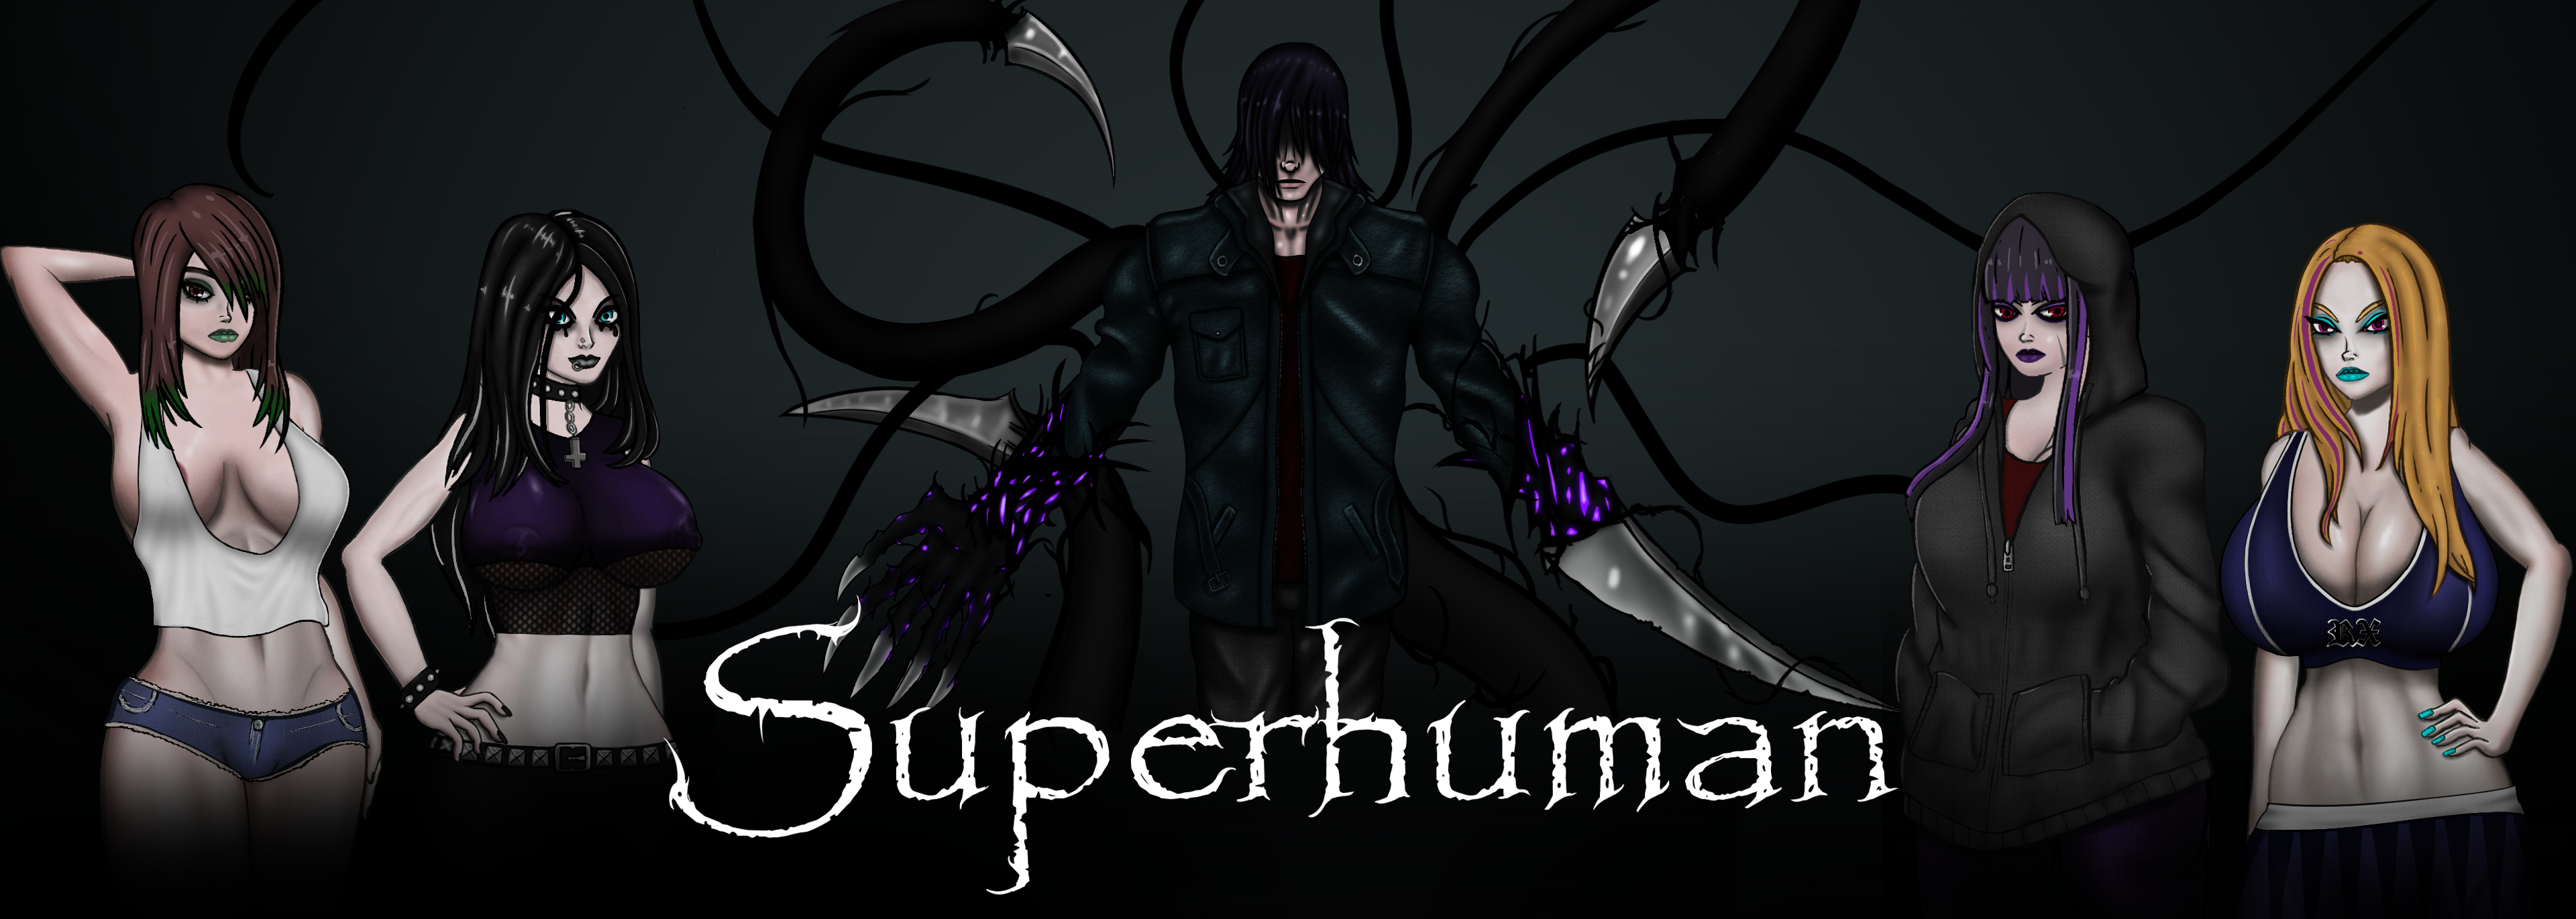 Superhuman [v0.1] main image